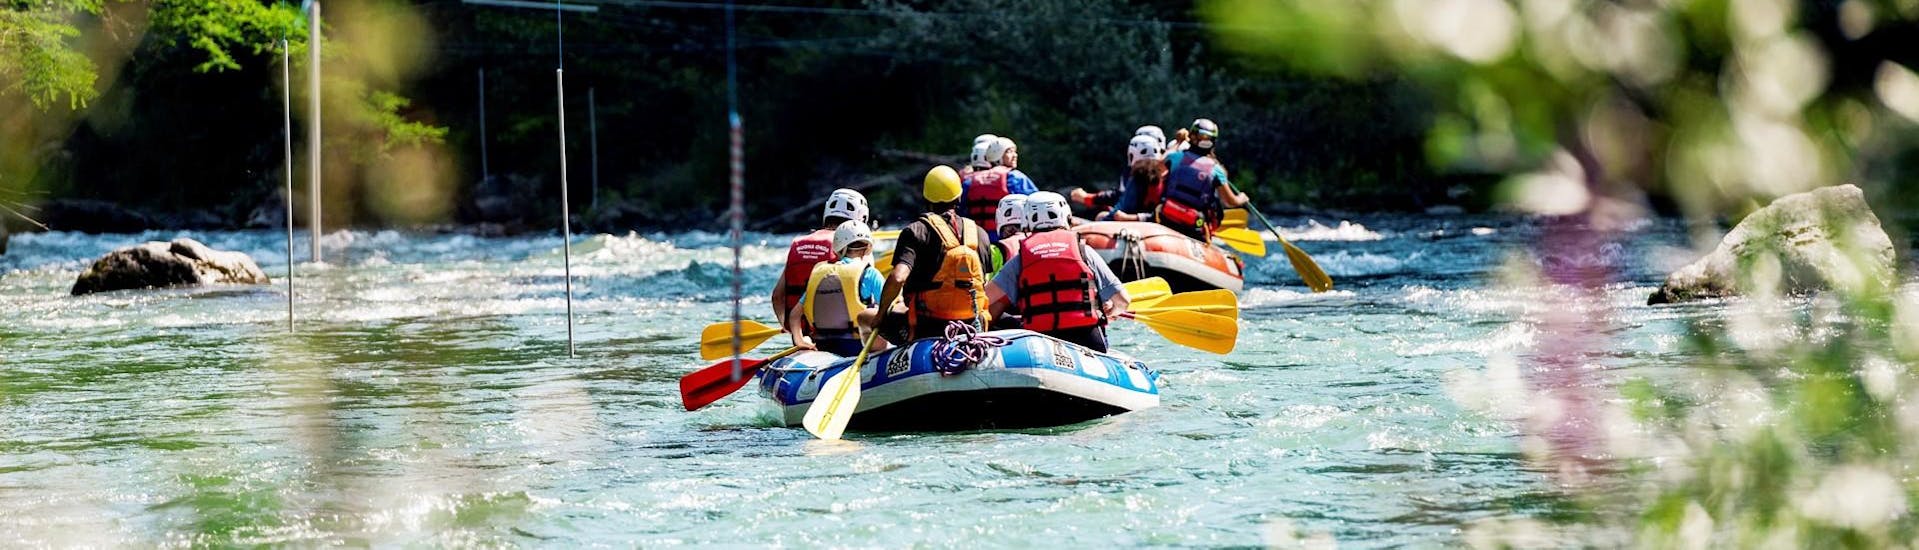 classic-rafting-on-the-stura-di-demonte-river-stiera-village-rafting-hero